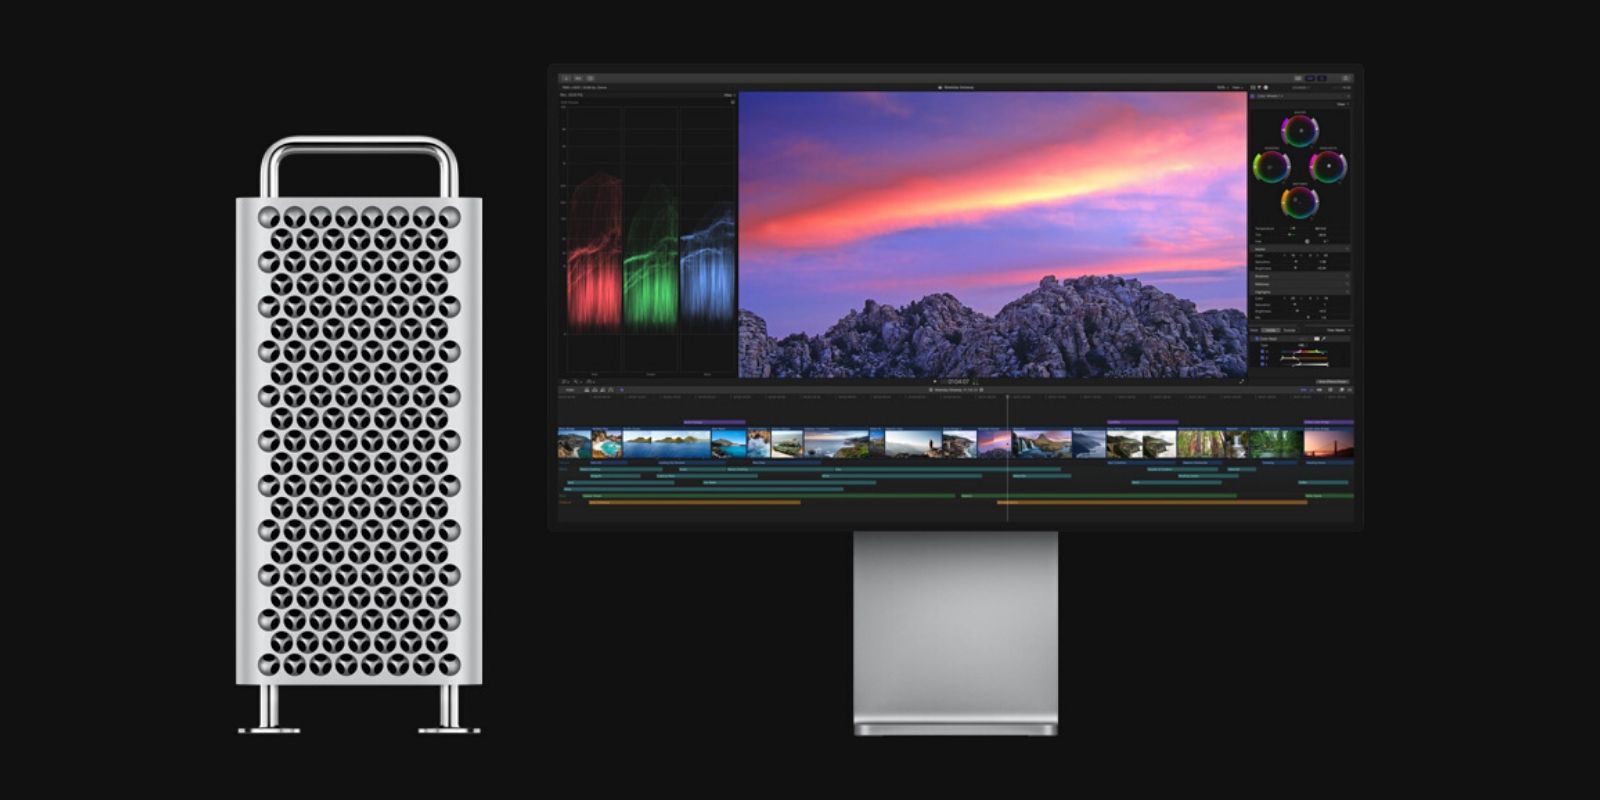 Apple Mac Pro running Final Cut Pro X